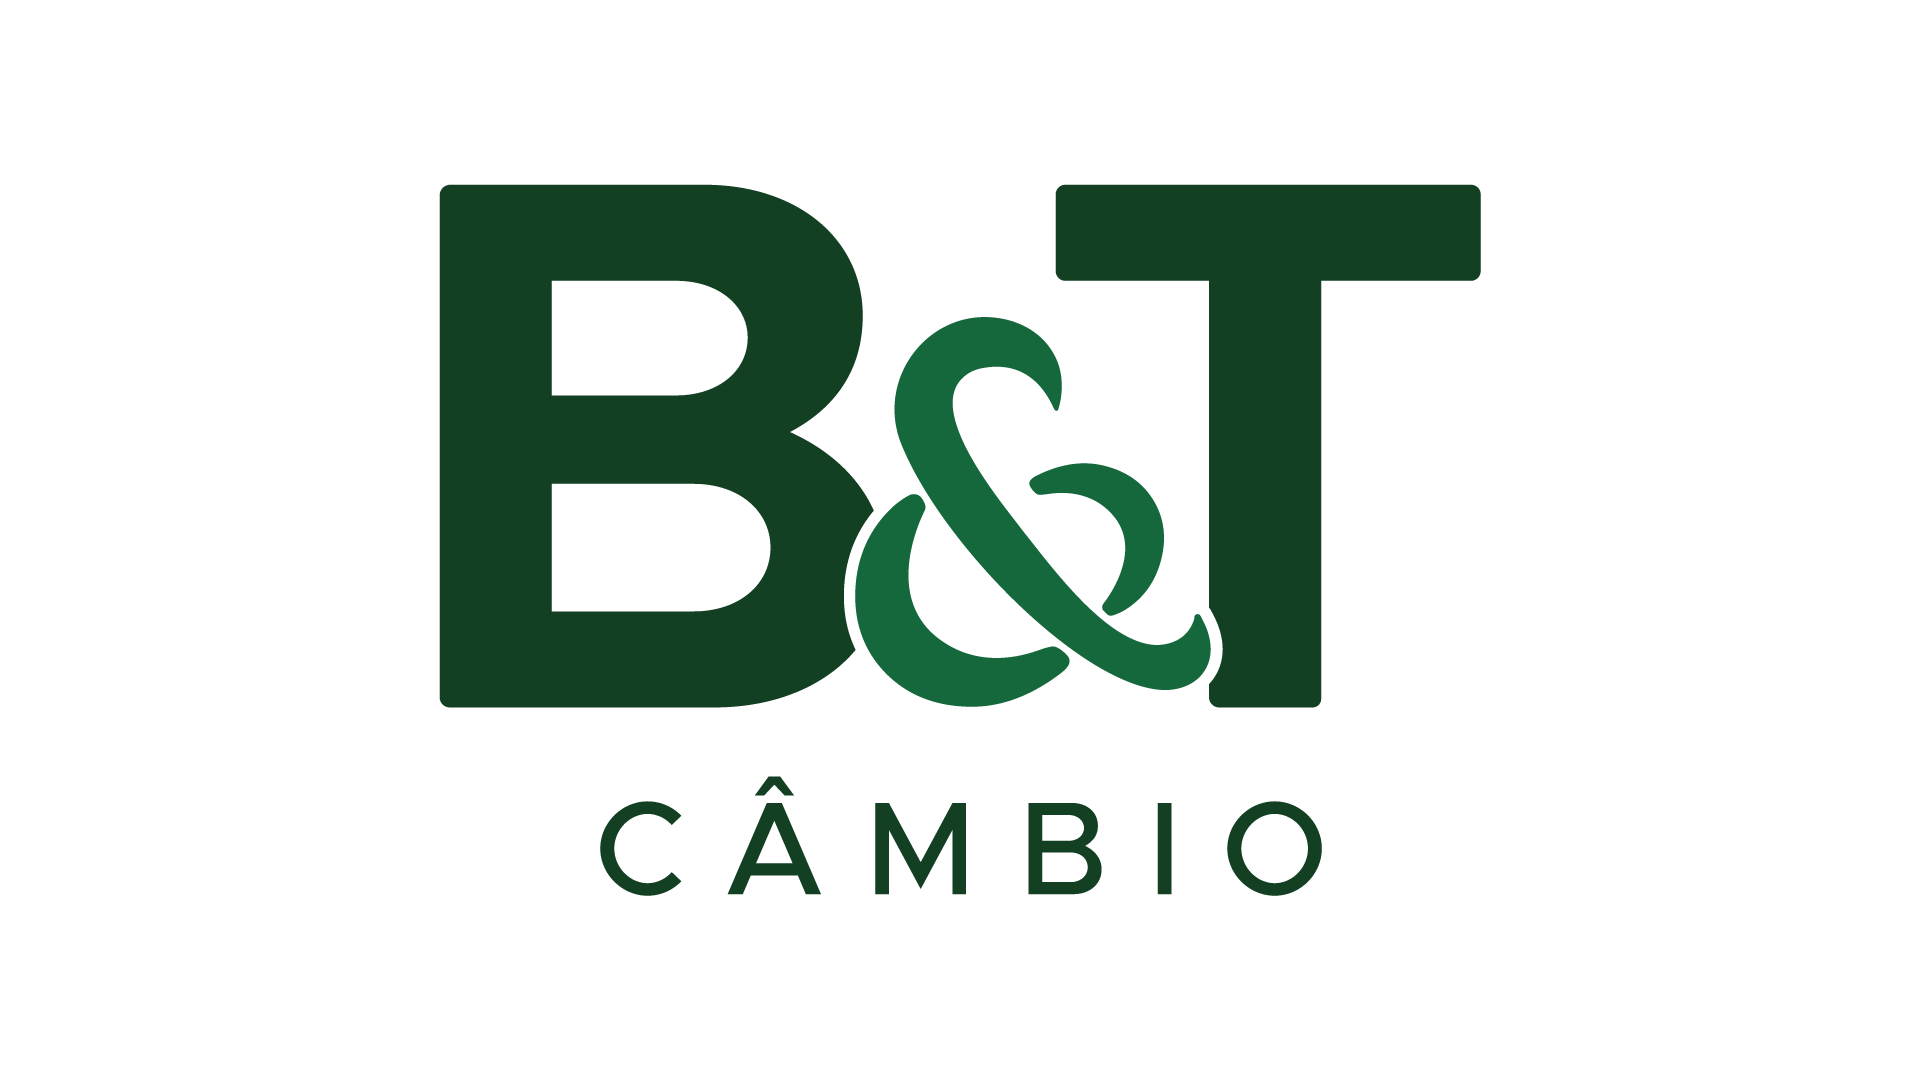 B&T CORRETORA DE CÂMBIO LTDA.